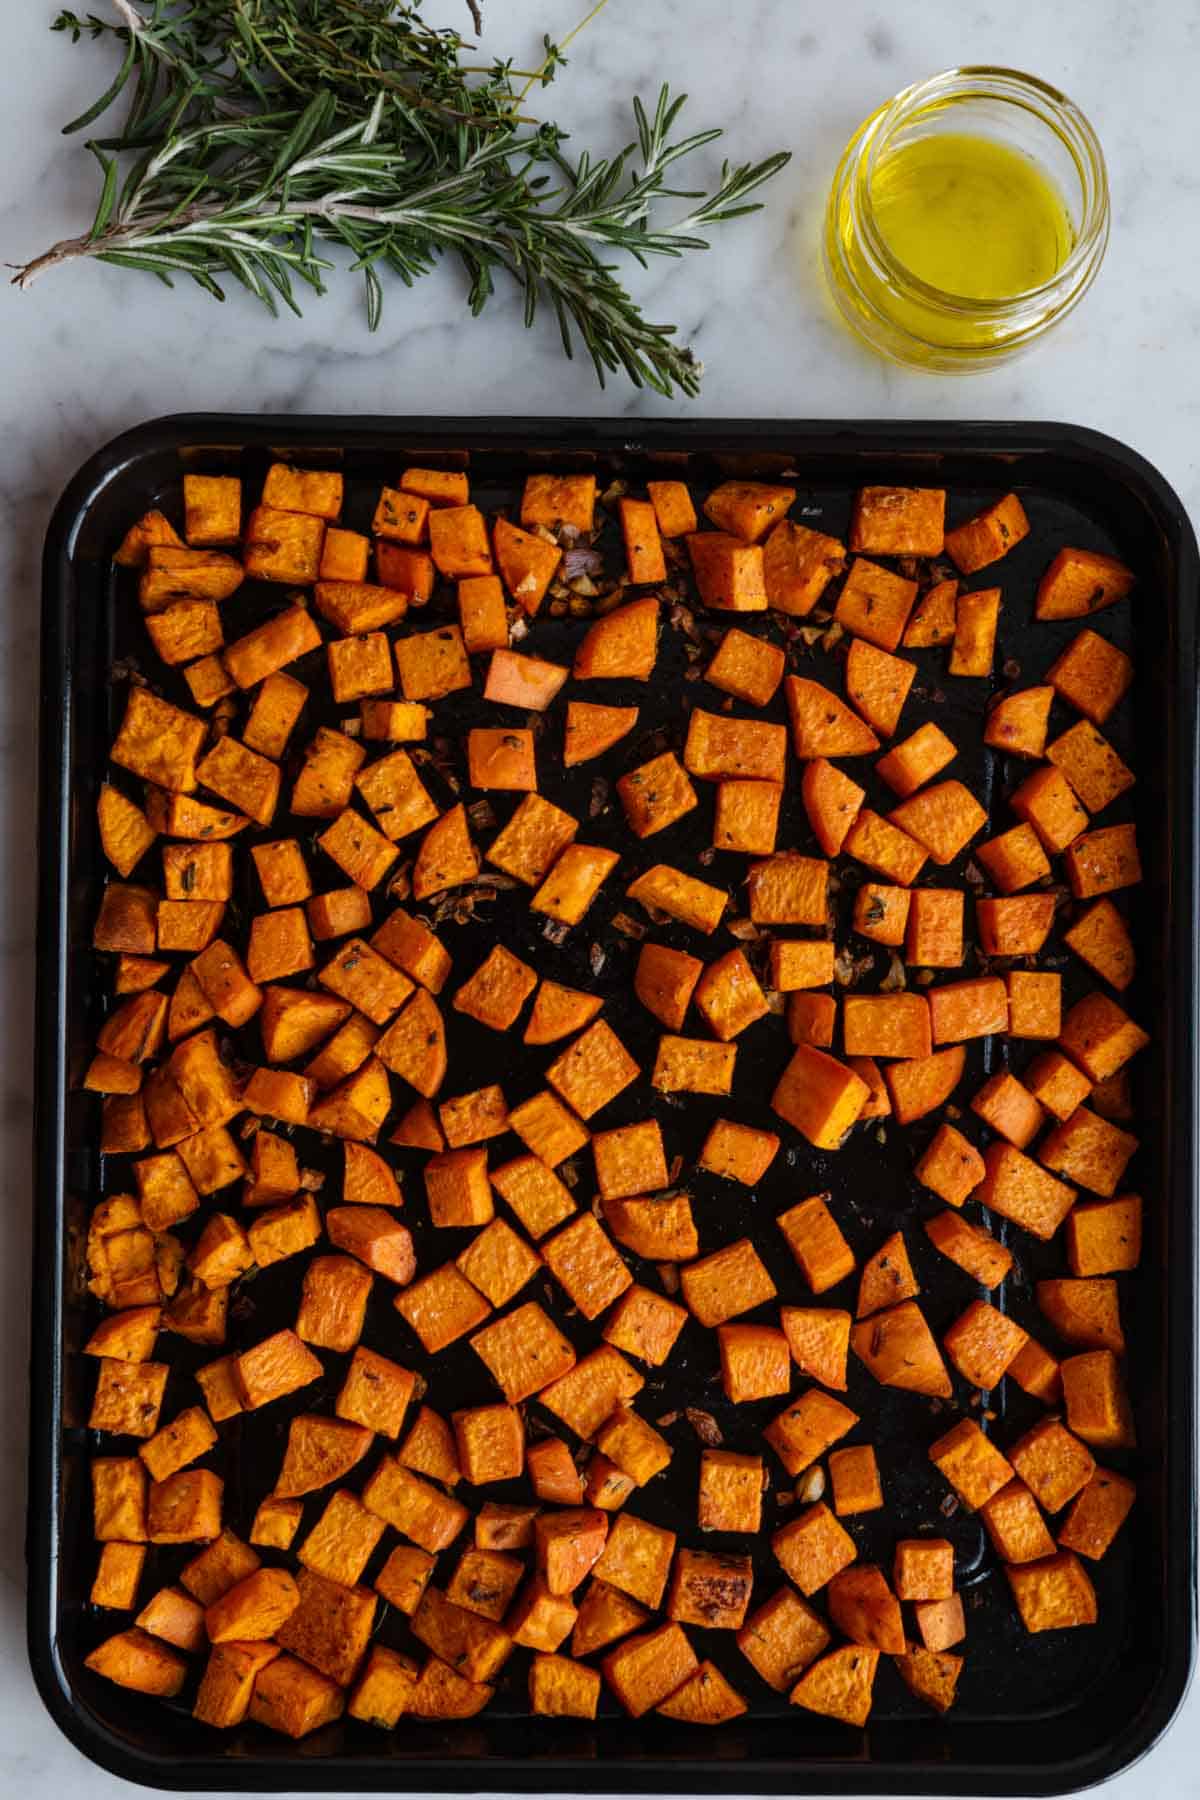 Roasted sweet potato cubes on a black baking tray.